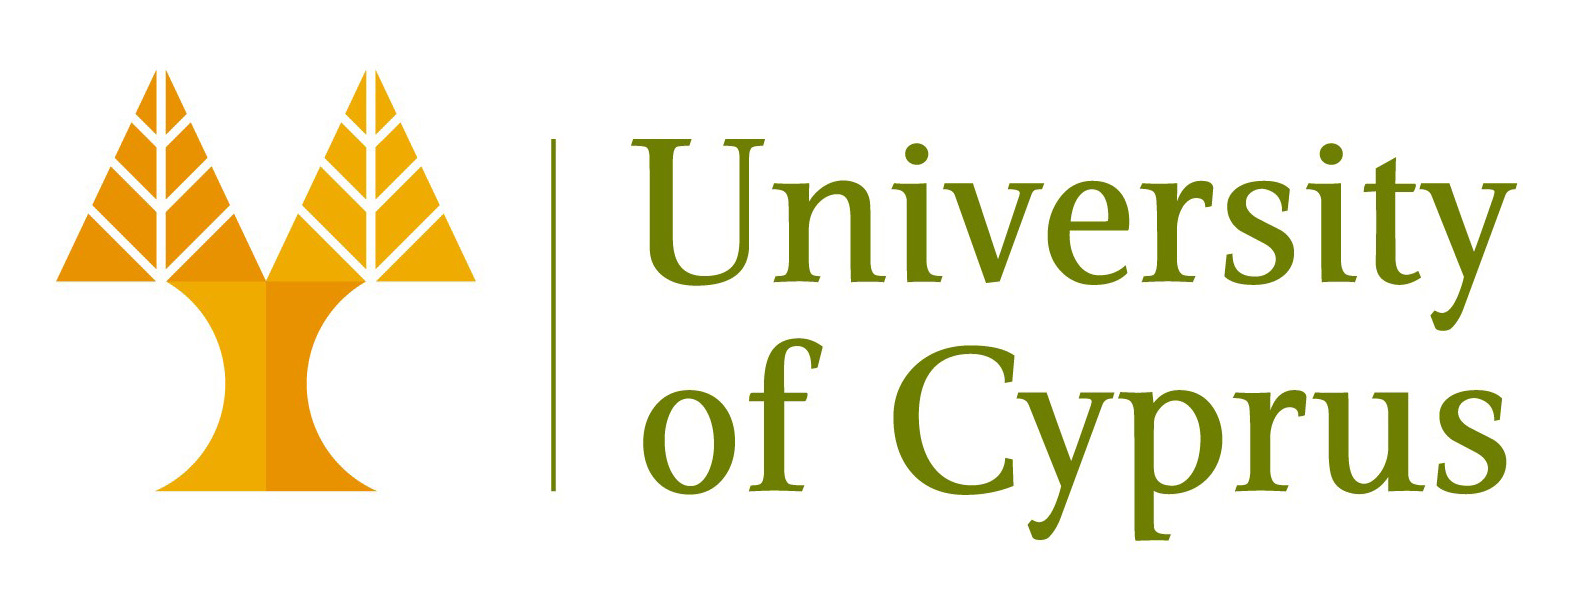 UCY-logo